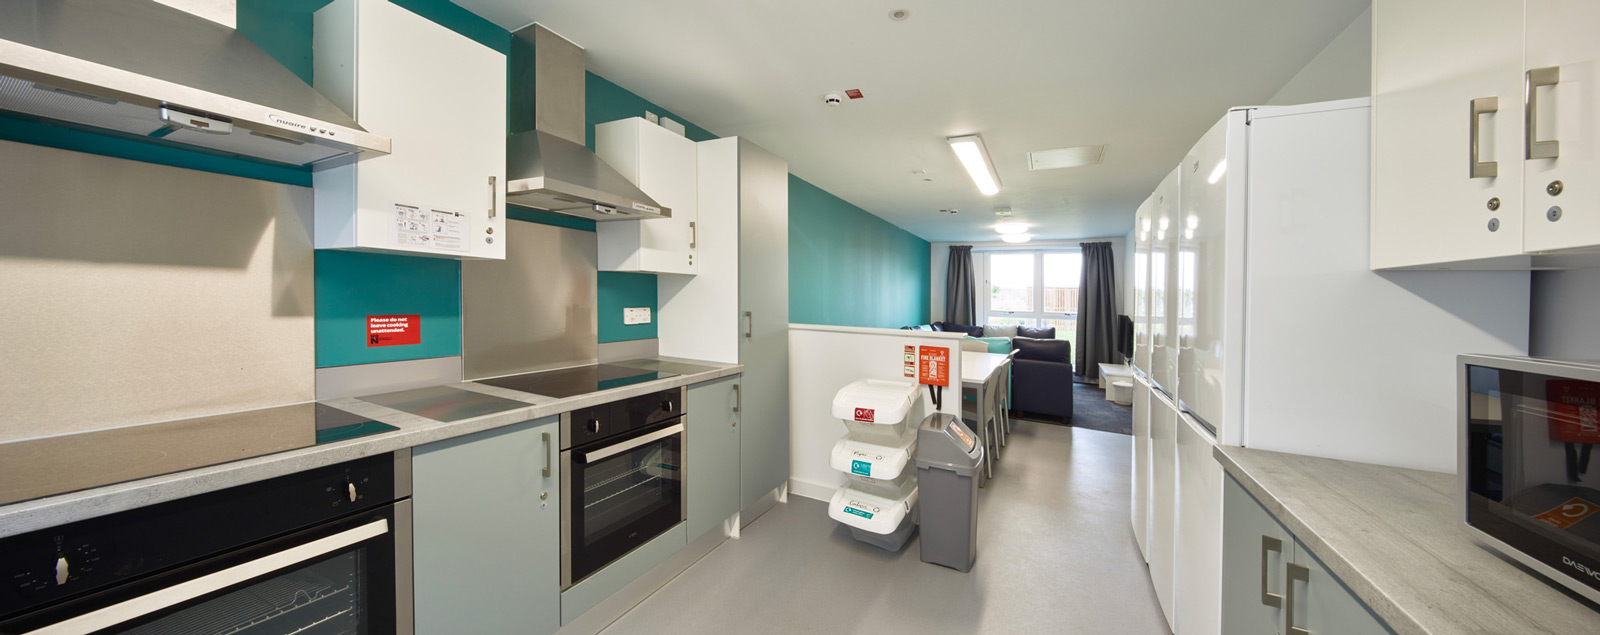 Kitchen in small en-suite flat